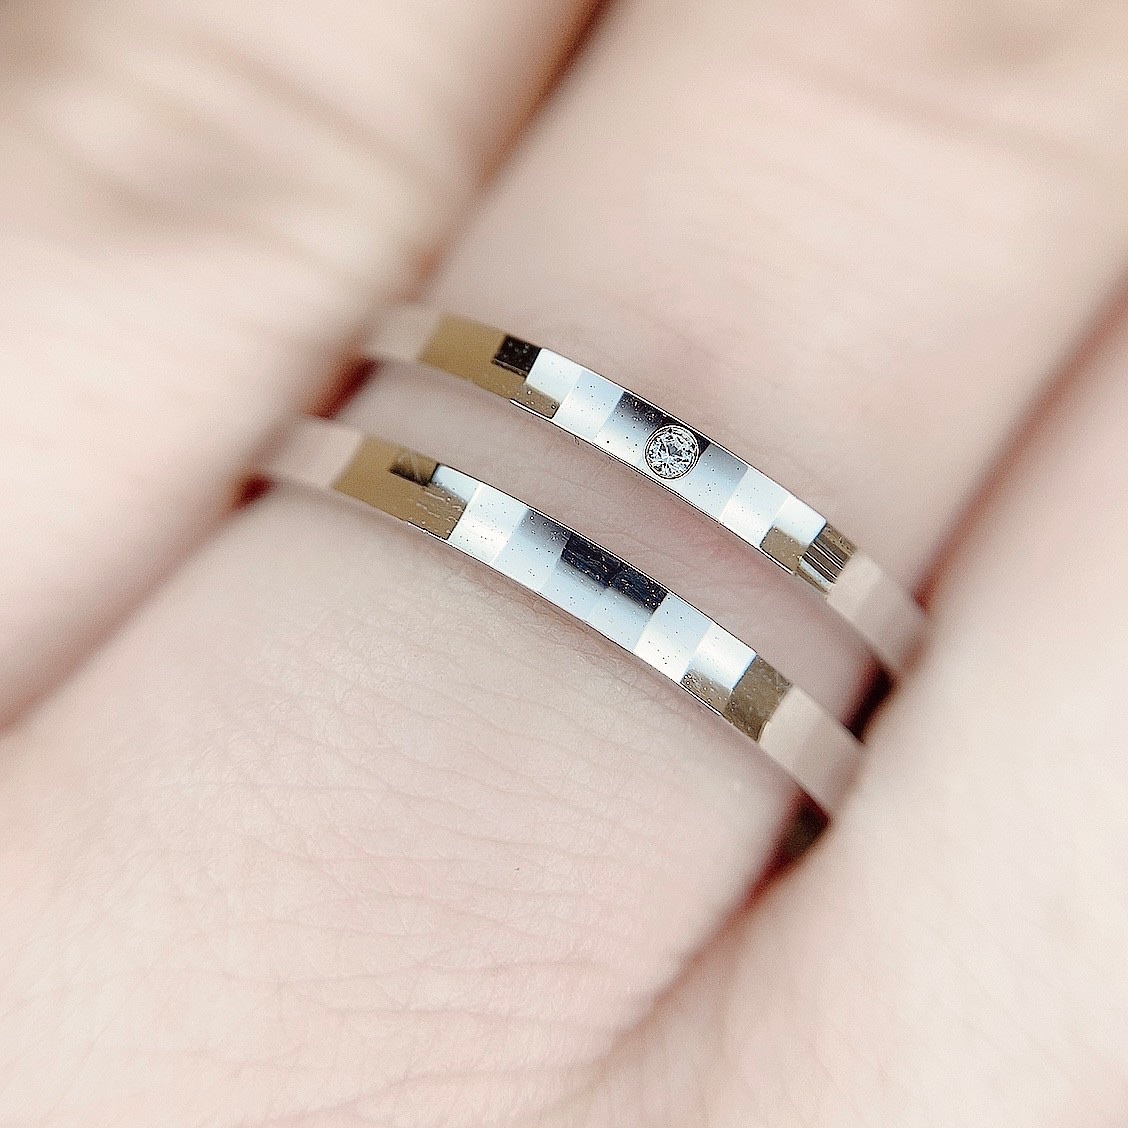 S L01 S M01 浜松市最大級の婚約指輪や結婚指輪が揃う Lucir K Bridal 浜松店